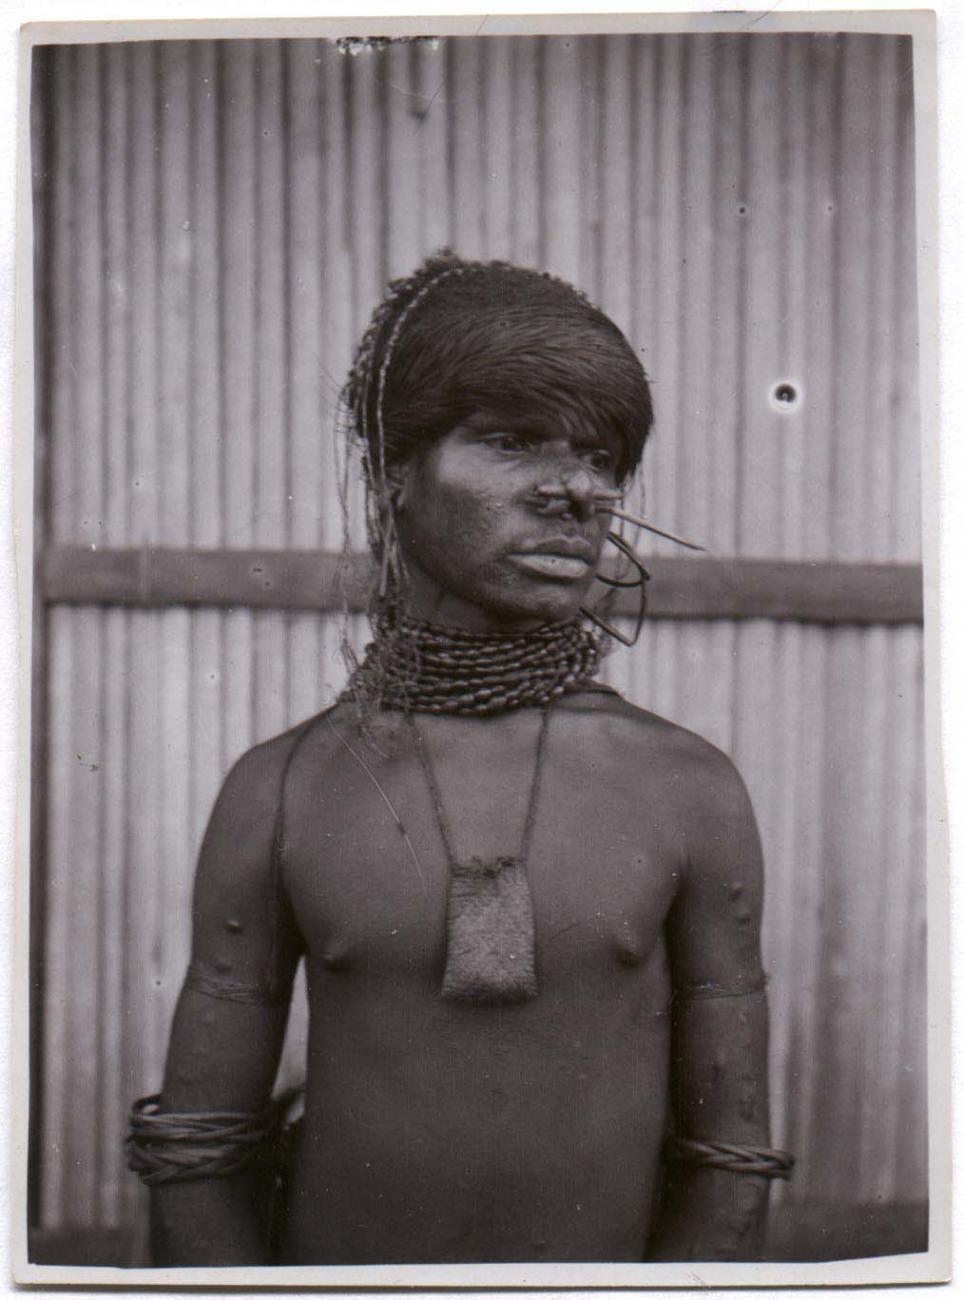 BD/38/6 - 
Man of West Papua.
